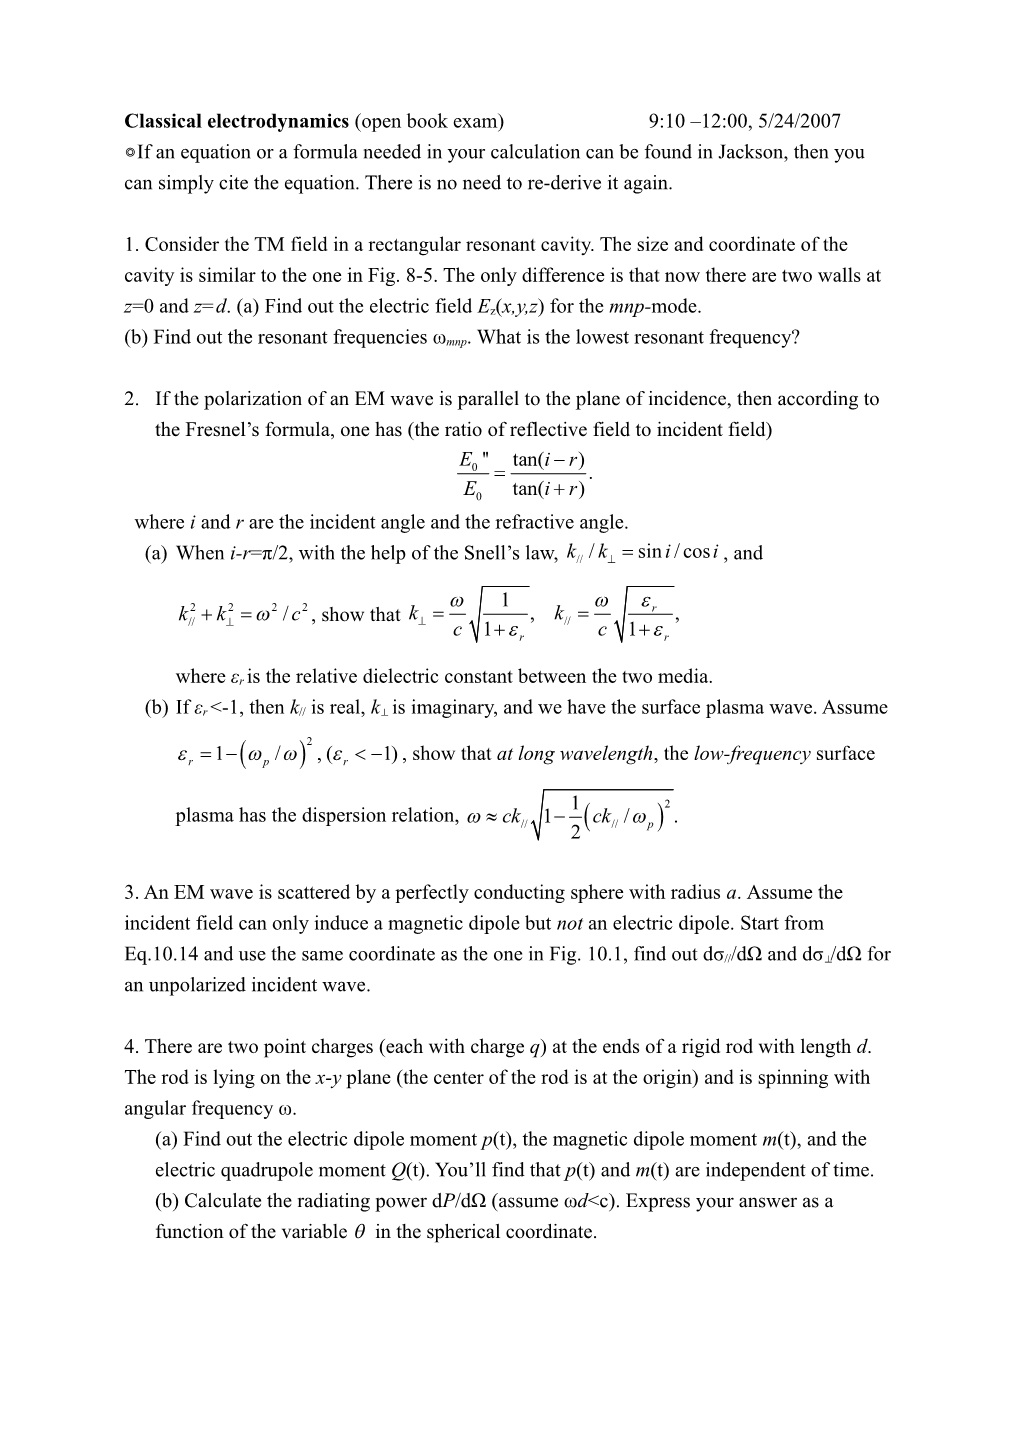 Classical Electrodynamics (Open Book Exam) 9:10 12:00, 5/24/2007